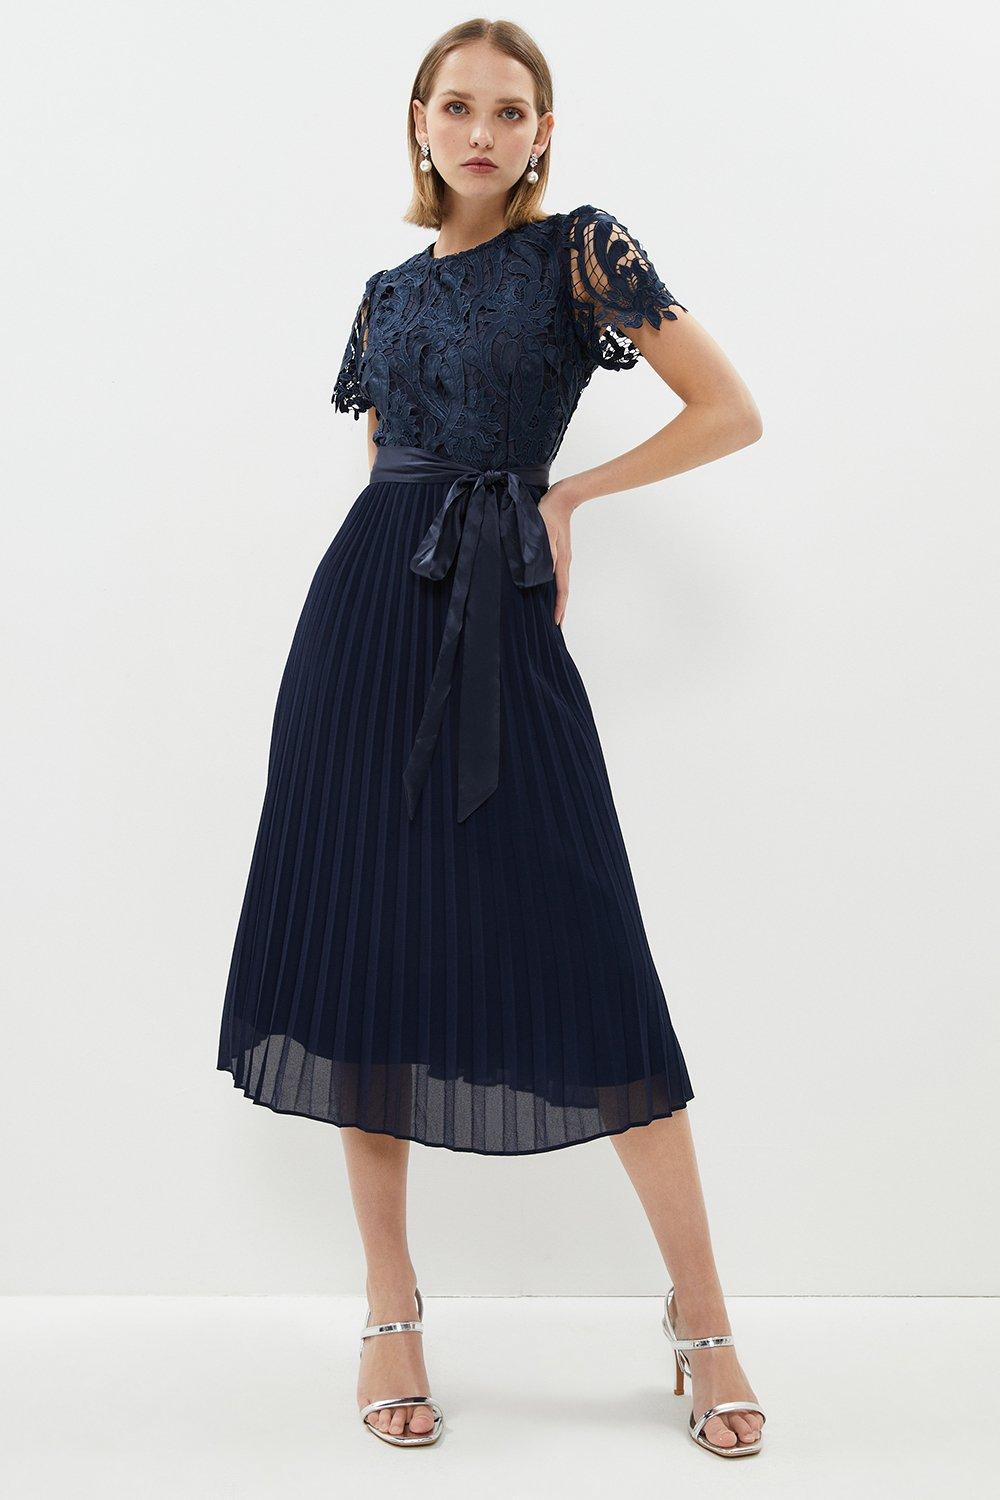 Petite Belted Lace Bodice Pleat Skirt Midi Dress - Navy